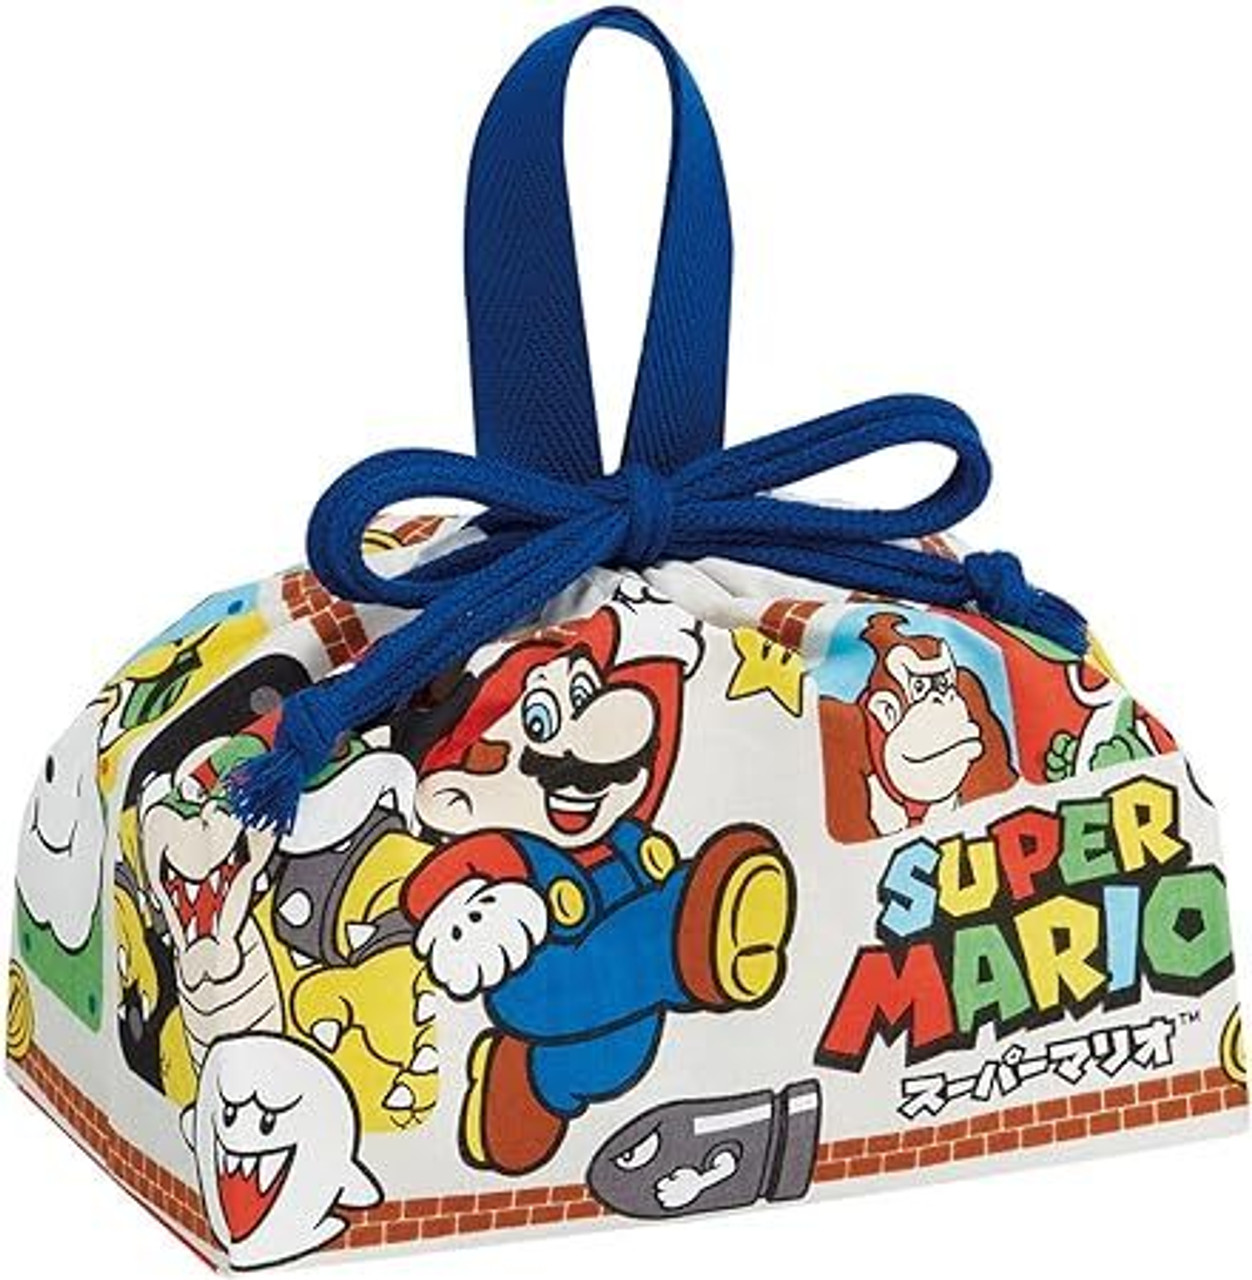 Super Mario 3D Satin Panel Lunch Bag